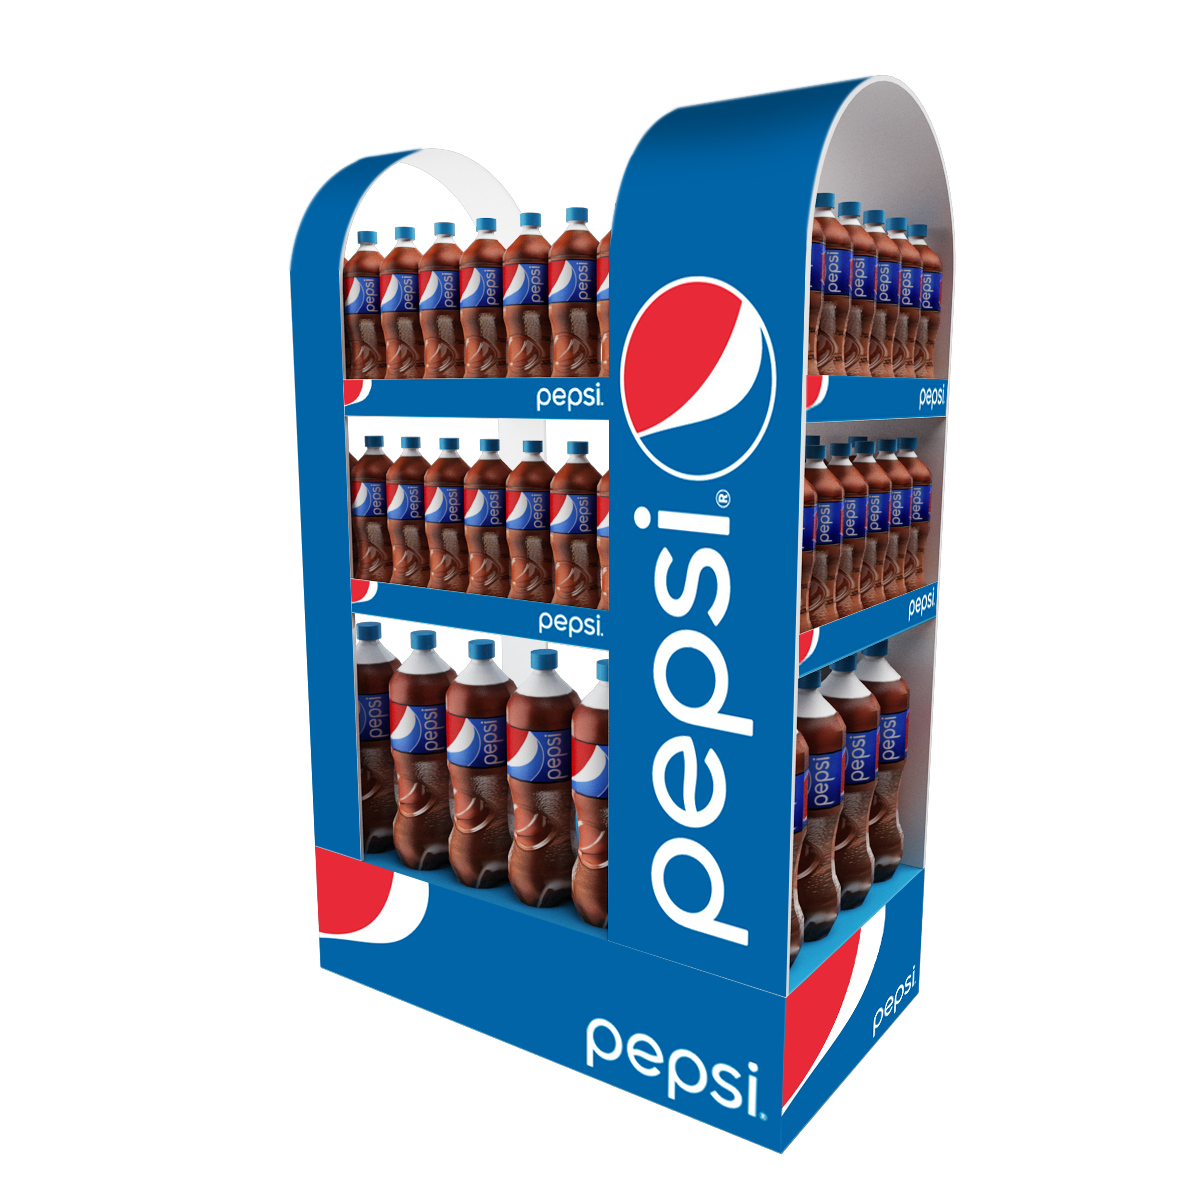 #pepsi #branding #packaging #graphicdesign #pointofsale #exhibition #display #webdesign #apps #promotional #BTL #diseño #publicidad #POP #presskit #visibility